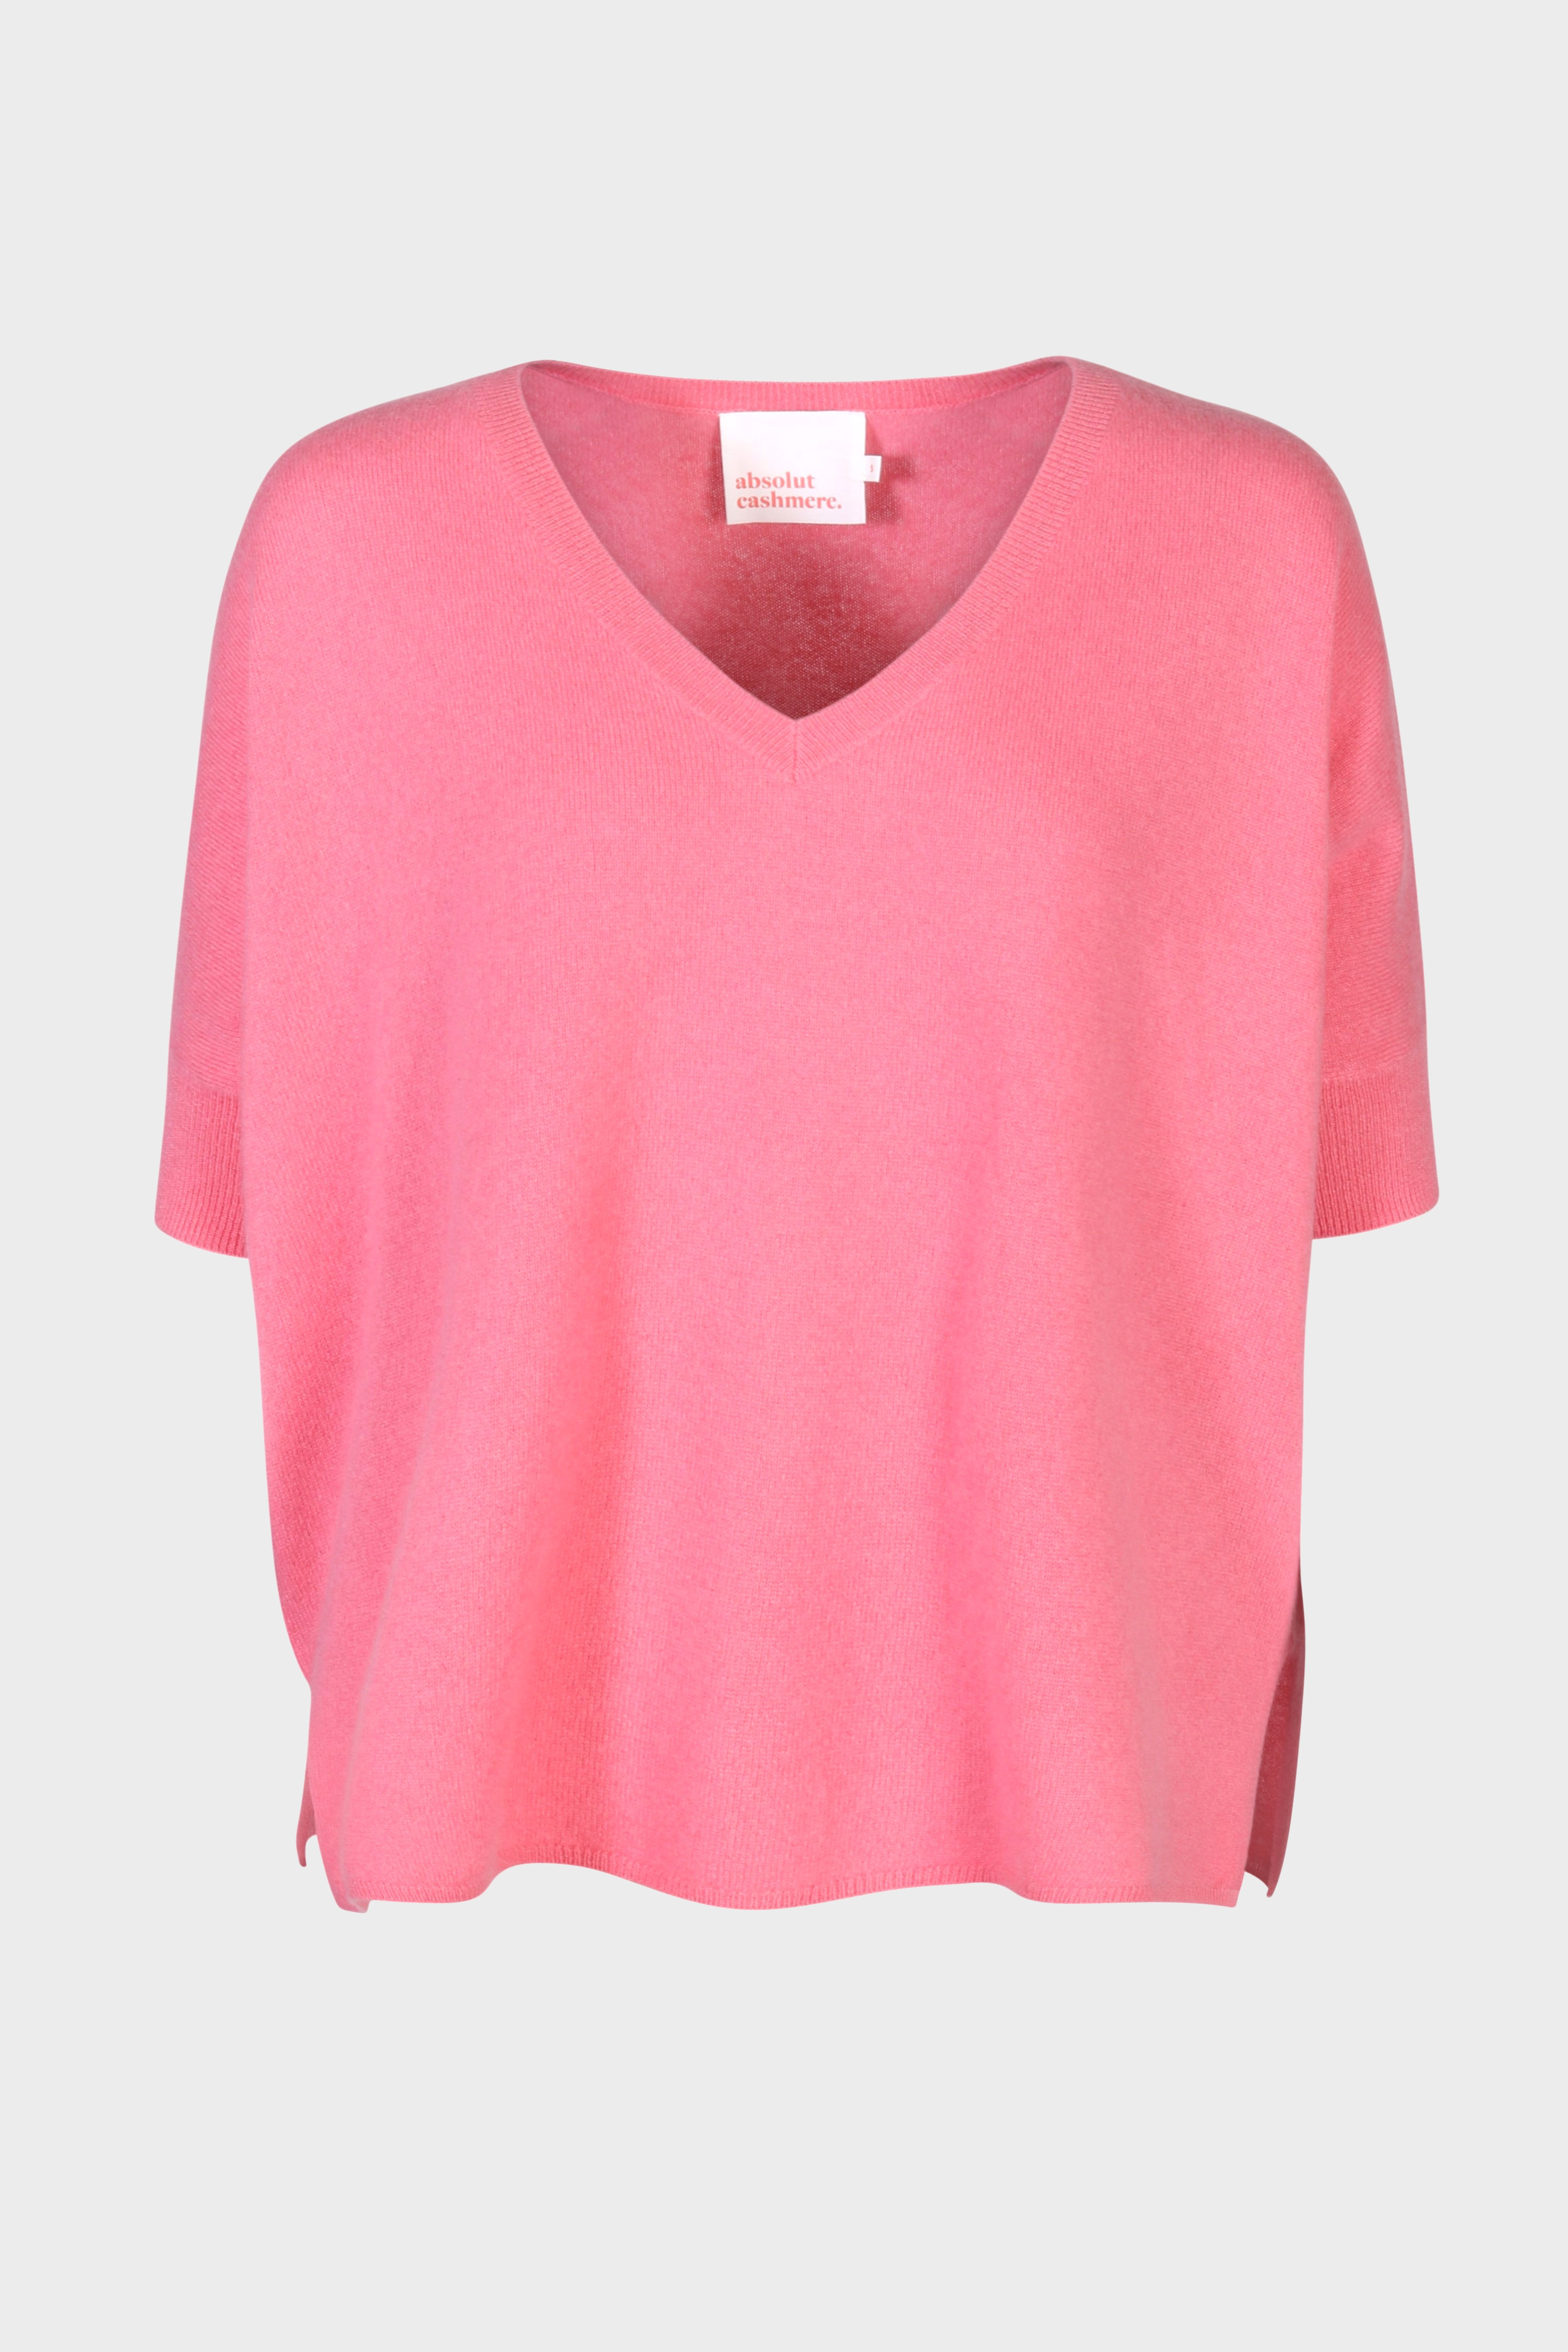 ABSOLUT CASHMERE Poncho V-Neck Sweater Kate Flamingo S